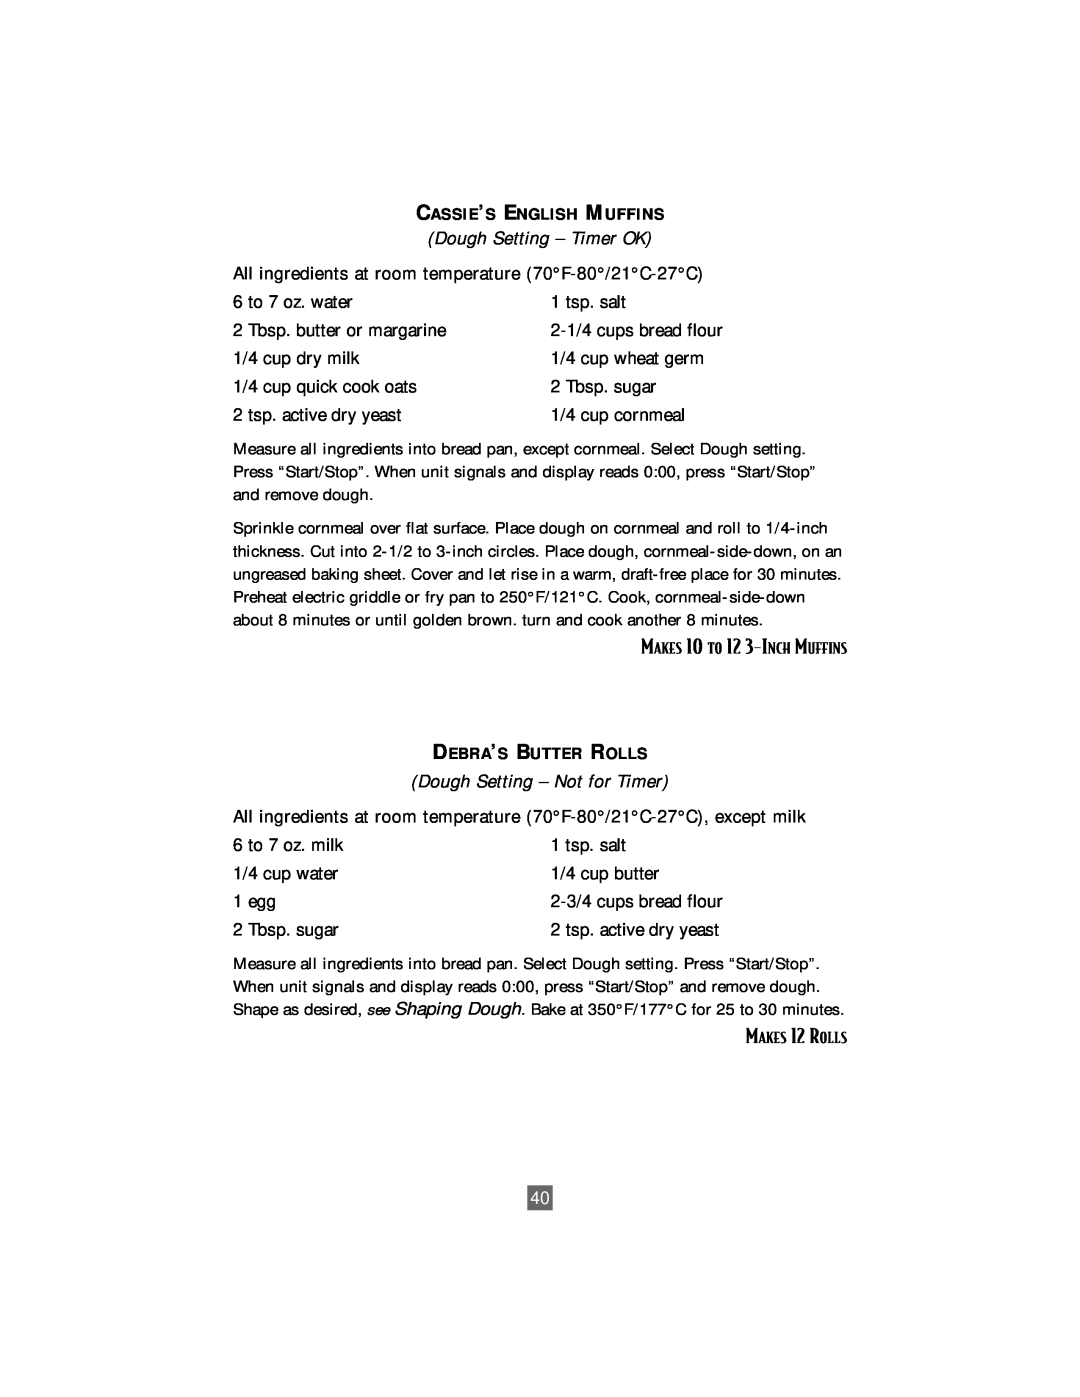 Sunbeam Bread/Dough Maker manual Dough Setting - Timer OK, Dough Setting - Not for Timer, Cassie’S English Muffins 